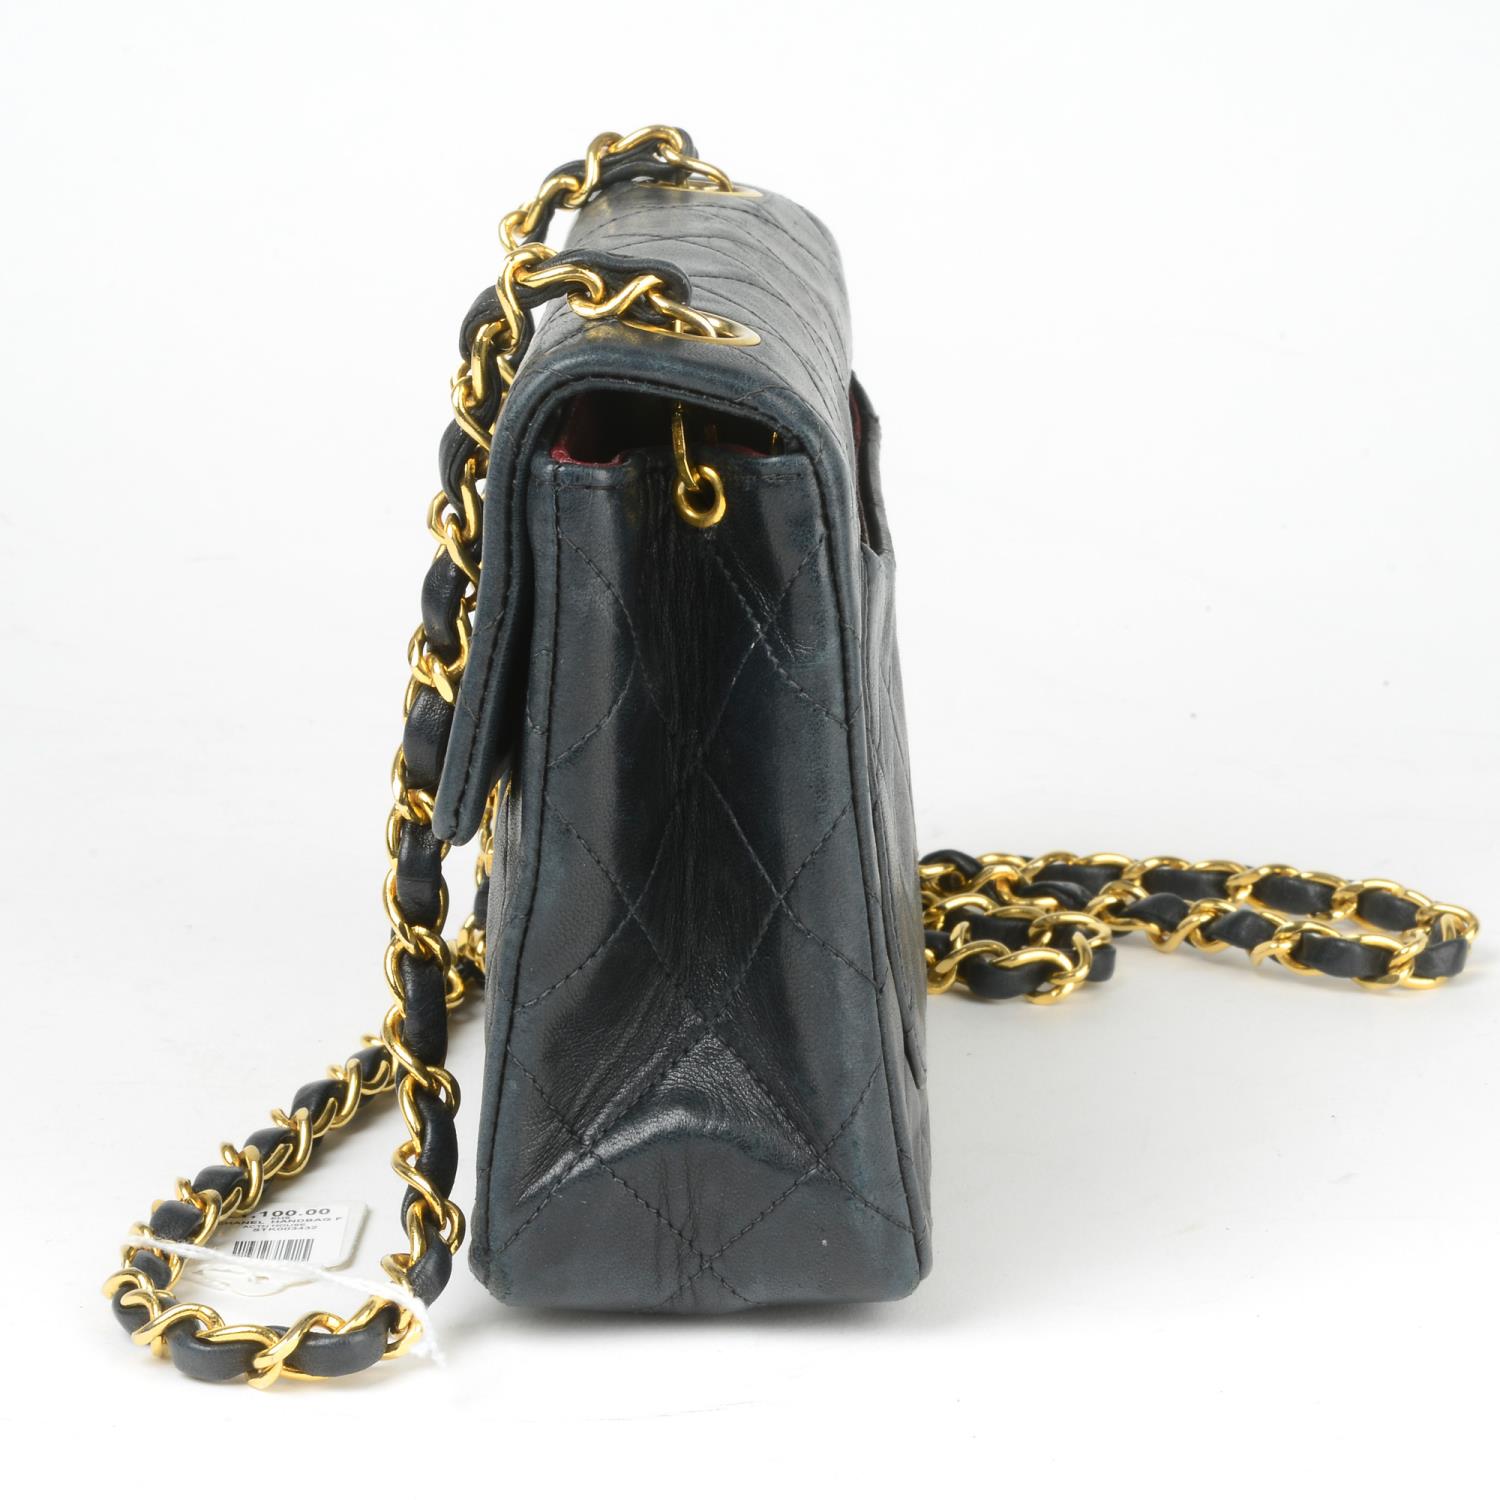 CHANEL - a Mini Square Classic Flap handbag. - Image 4 of 5